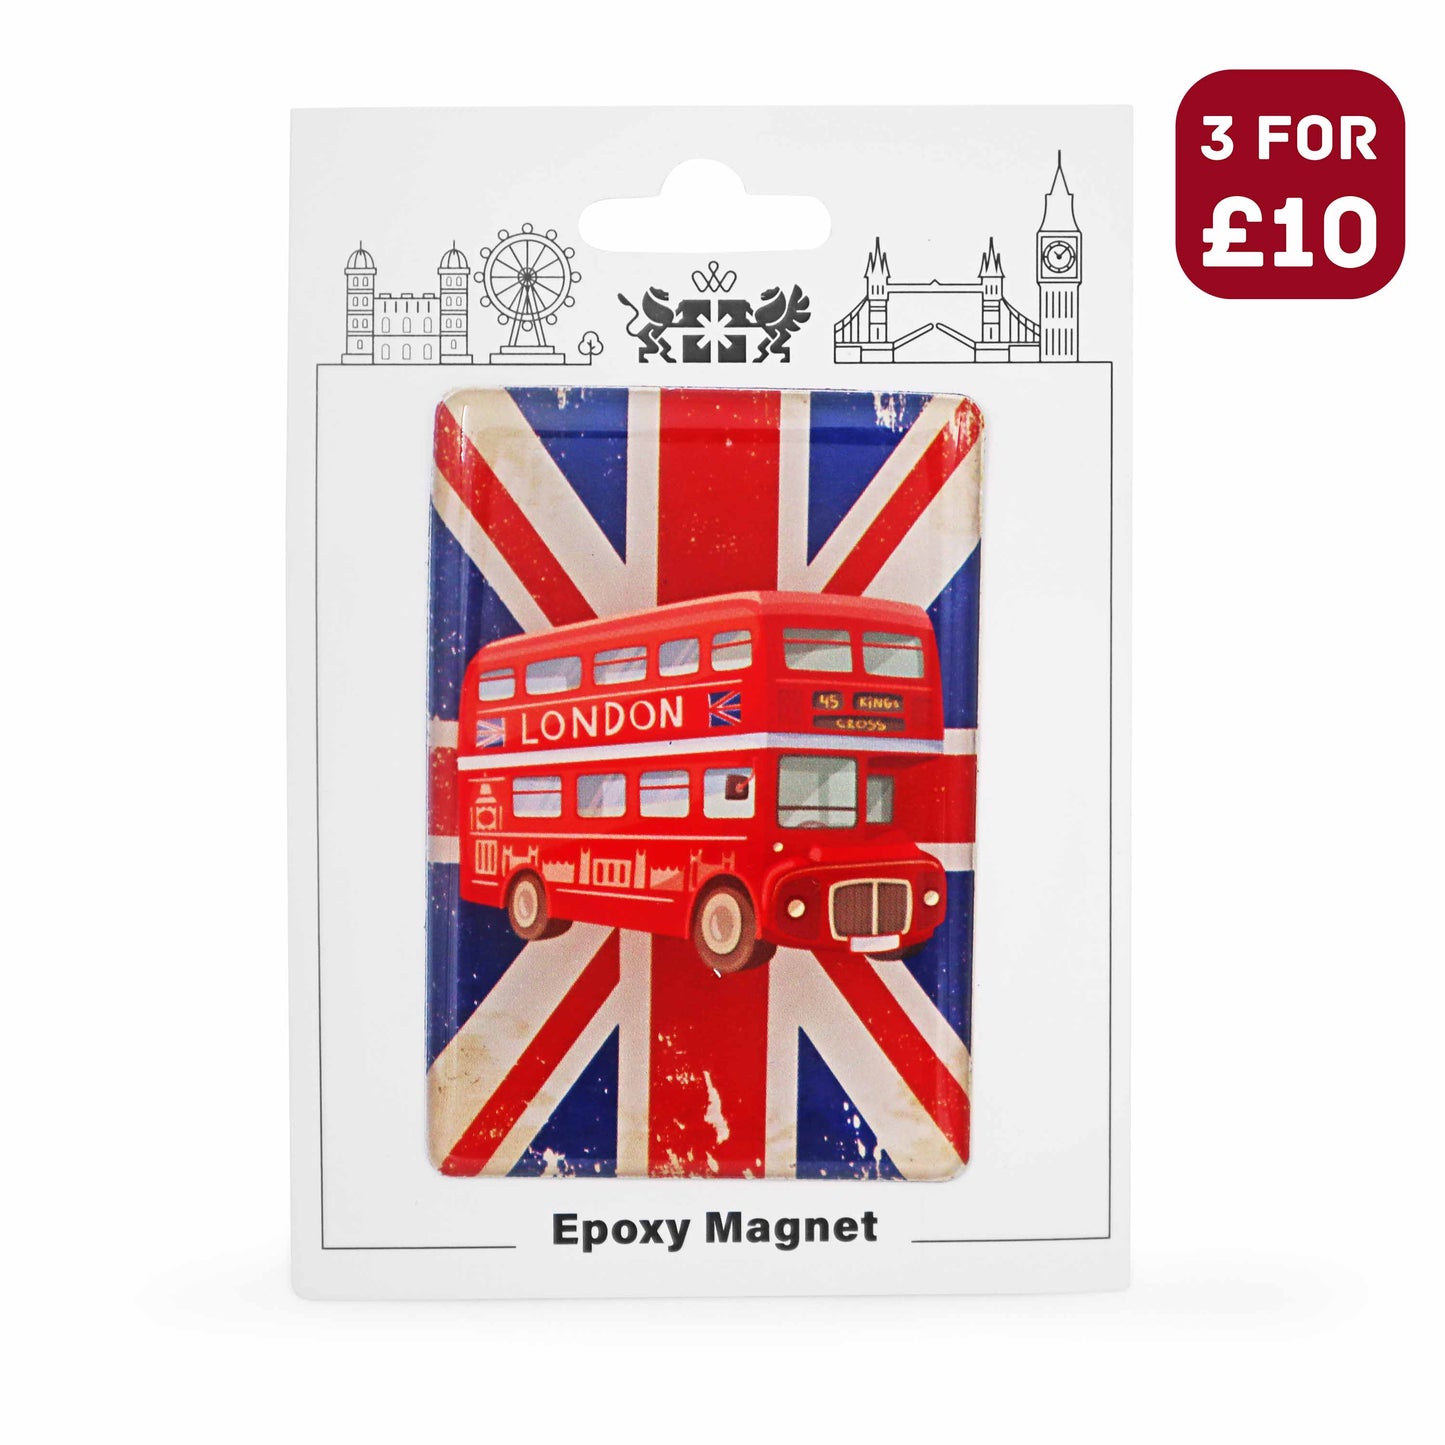 London Souvenir Epoxy Magnet - Design 8 - British Gifts